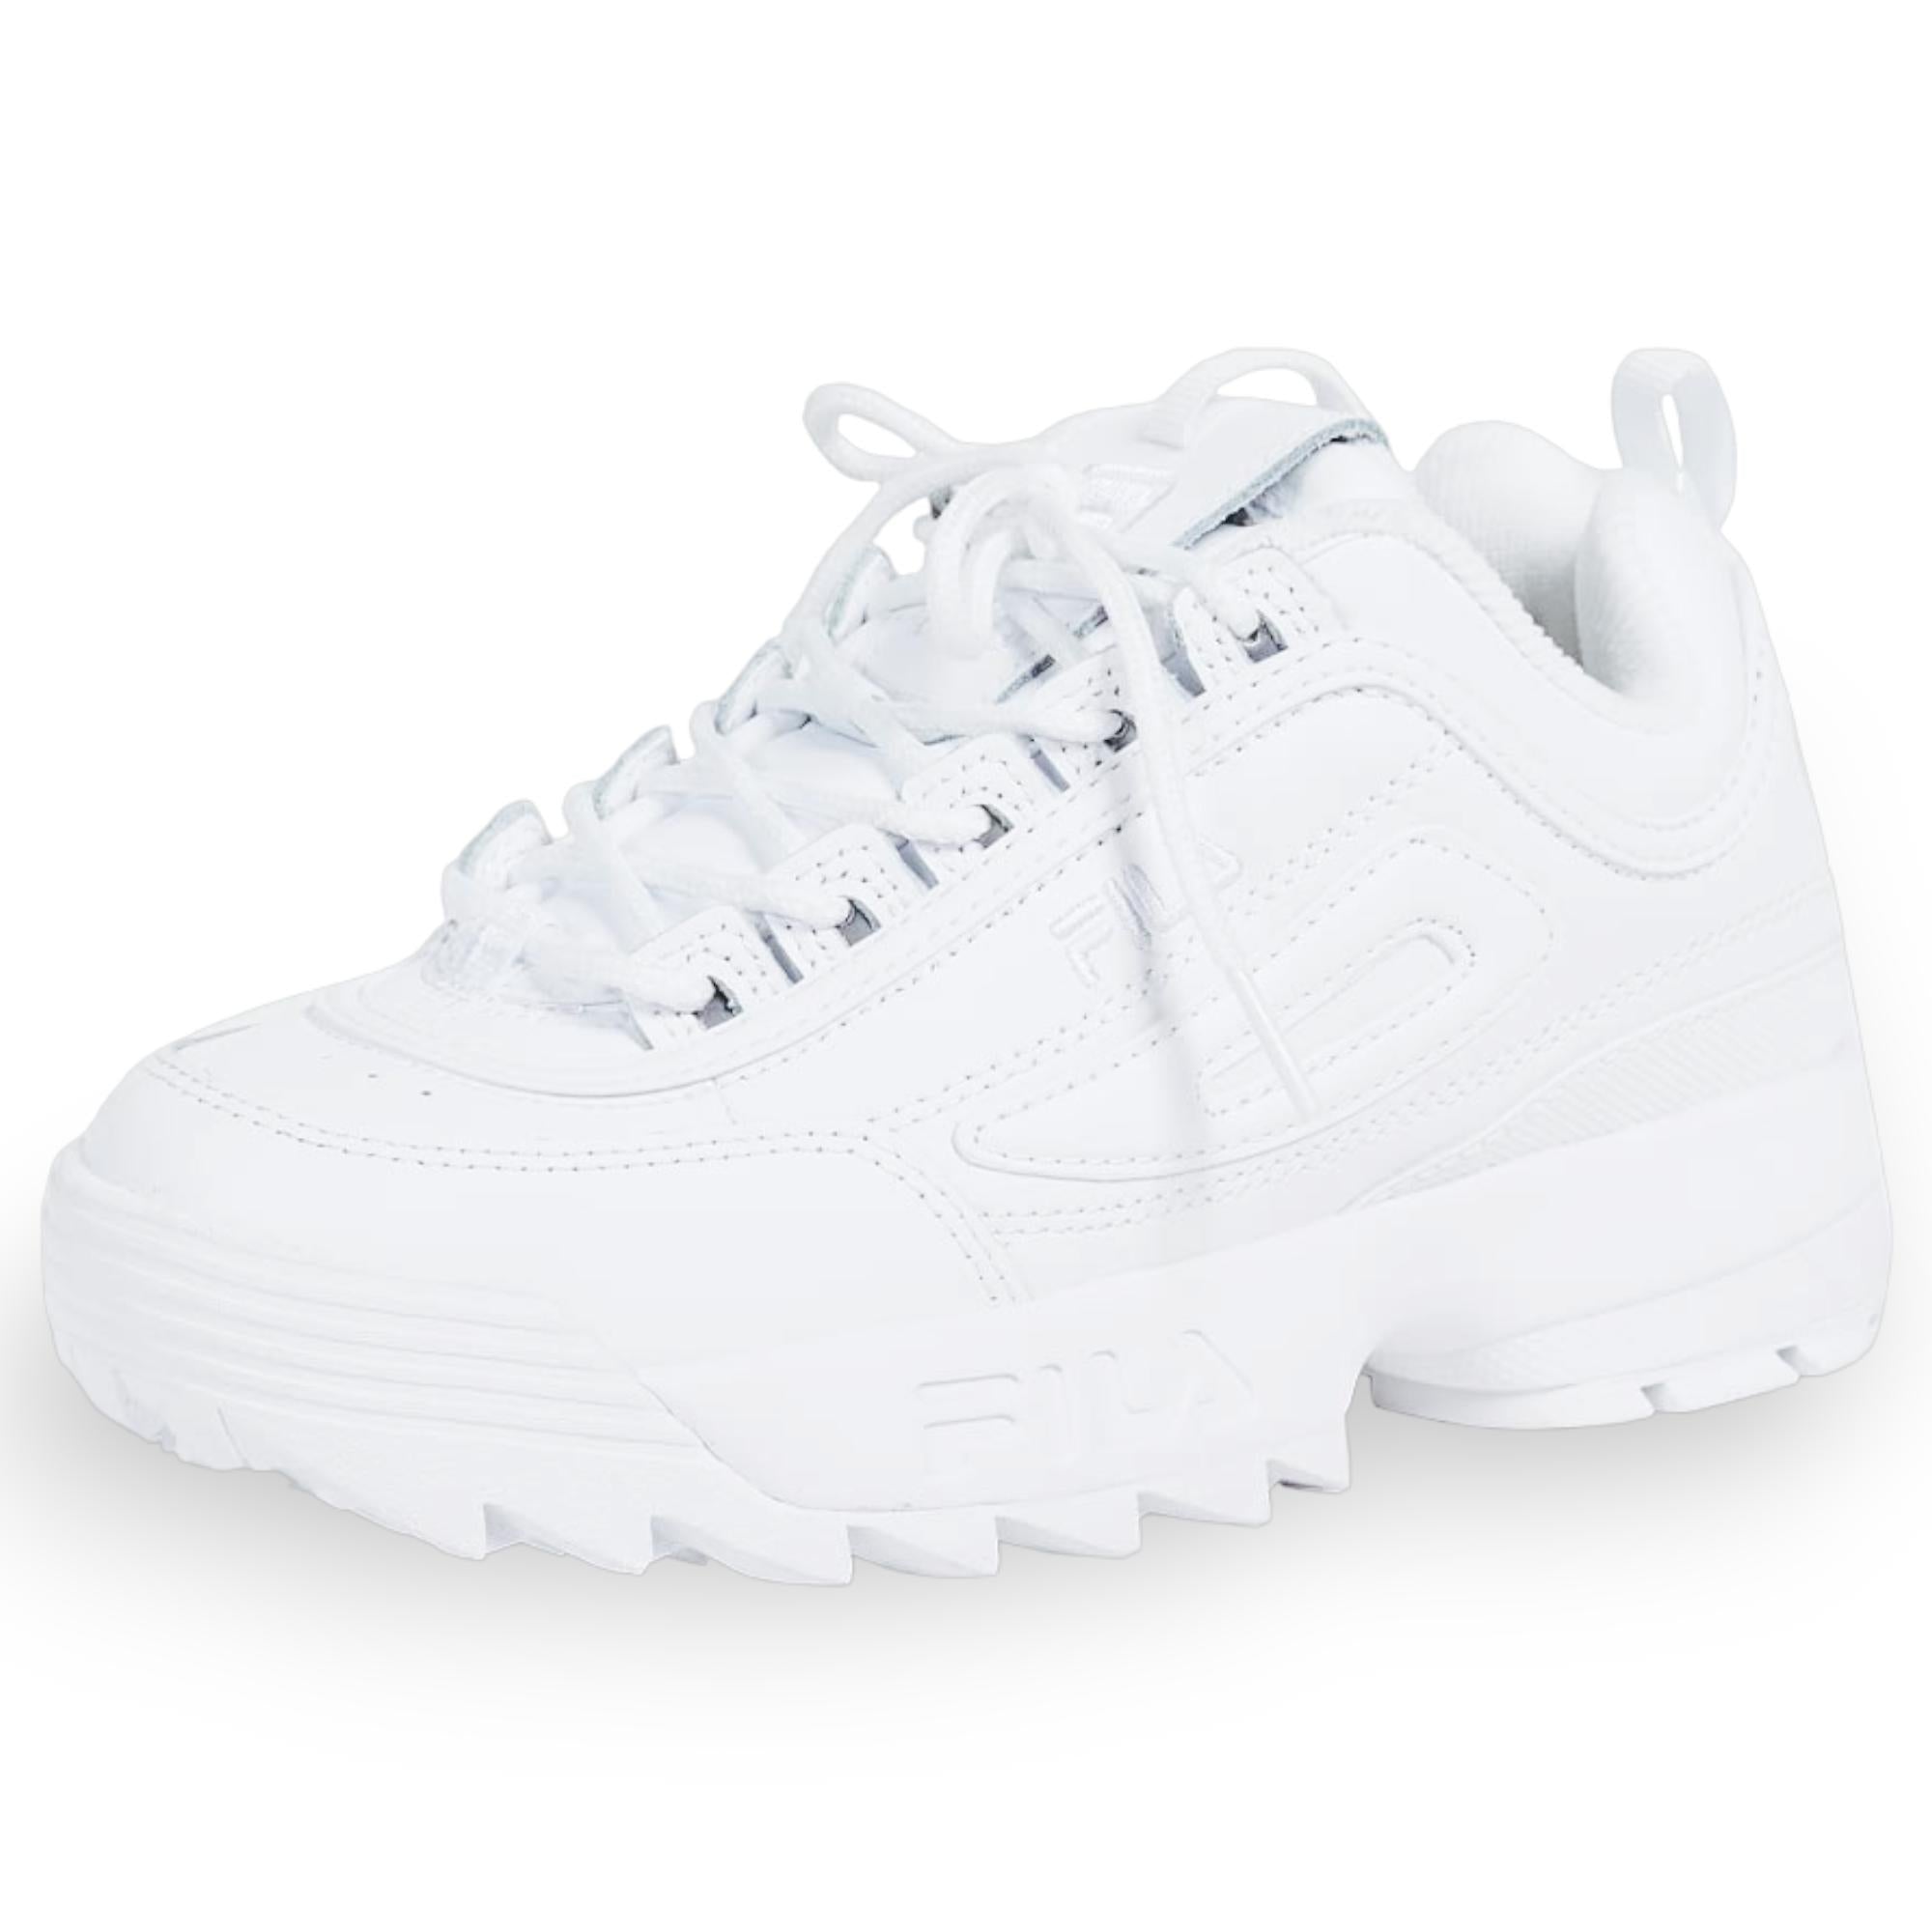 beddengoed Honderd jaar keuken Fila Women's Disruptor 2 II Sneaker All White Comfortable Walking Shoe